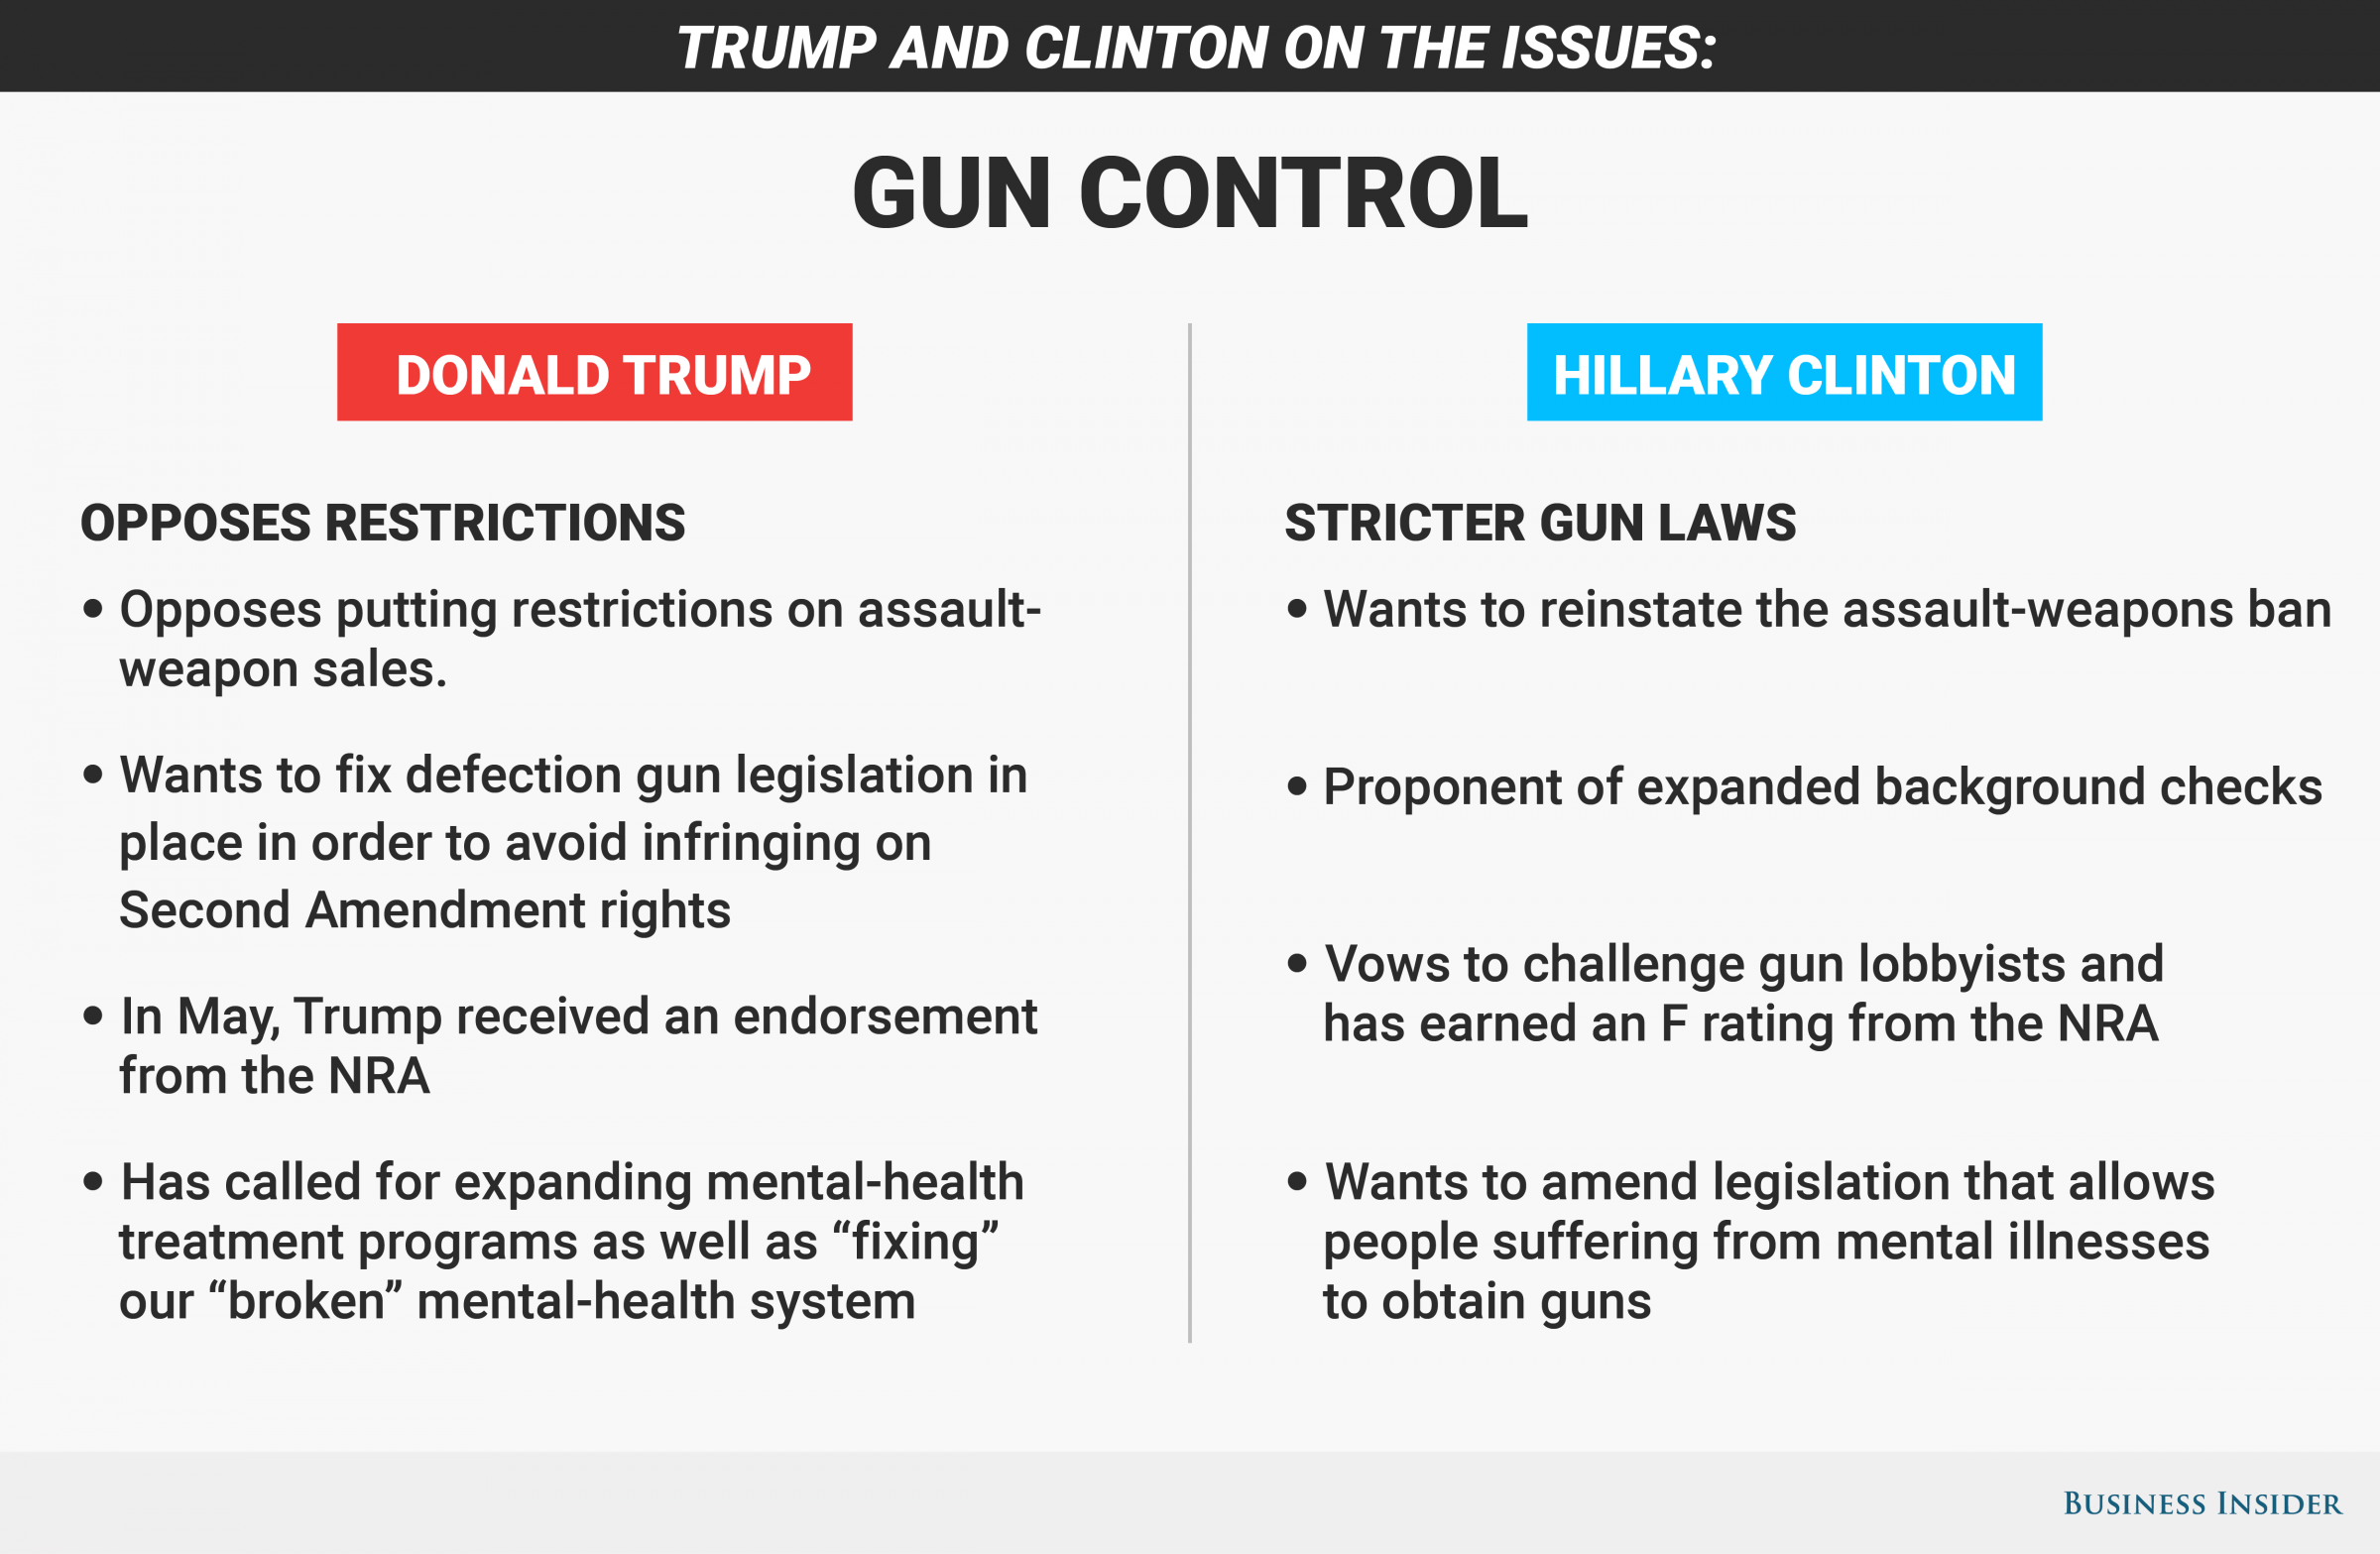 On Gun Control 